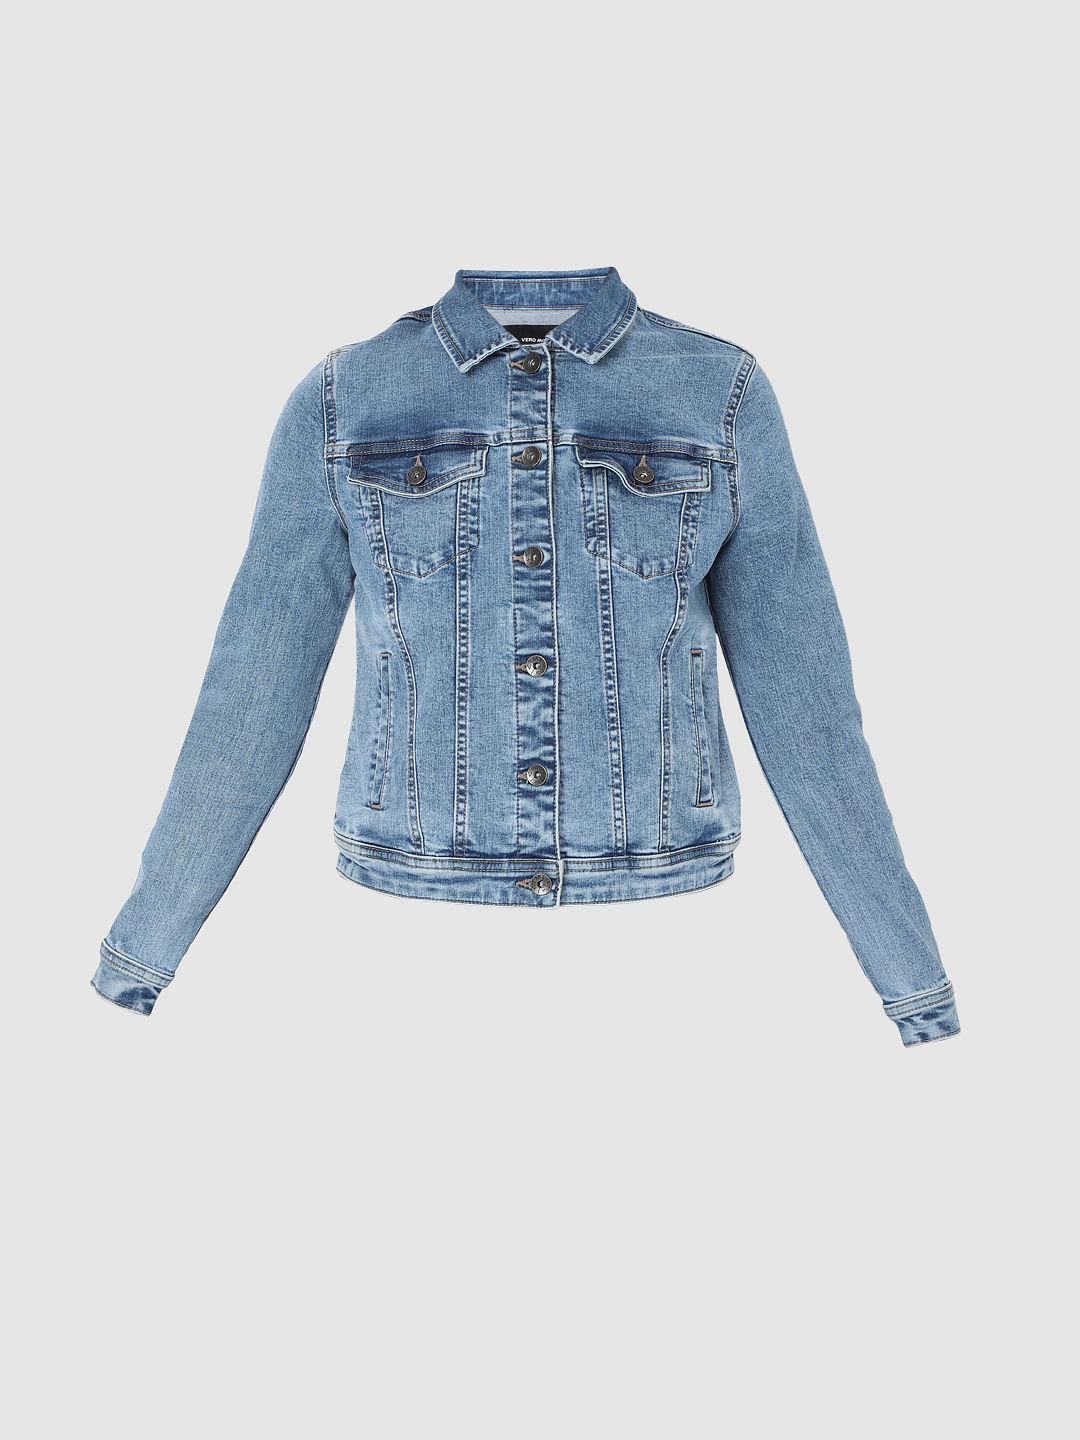 PMR Full Sleeve Solid Women Light Blue Denim Jacket - Frau Shoppy